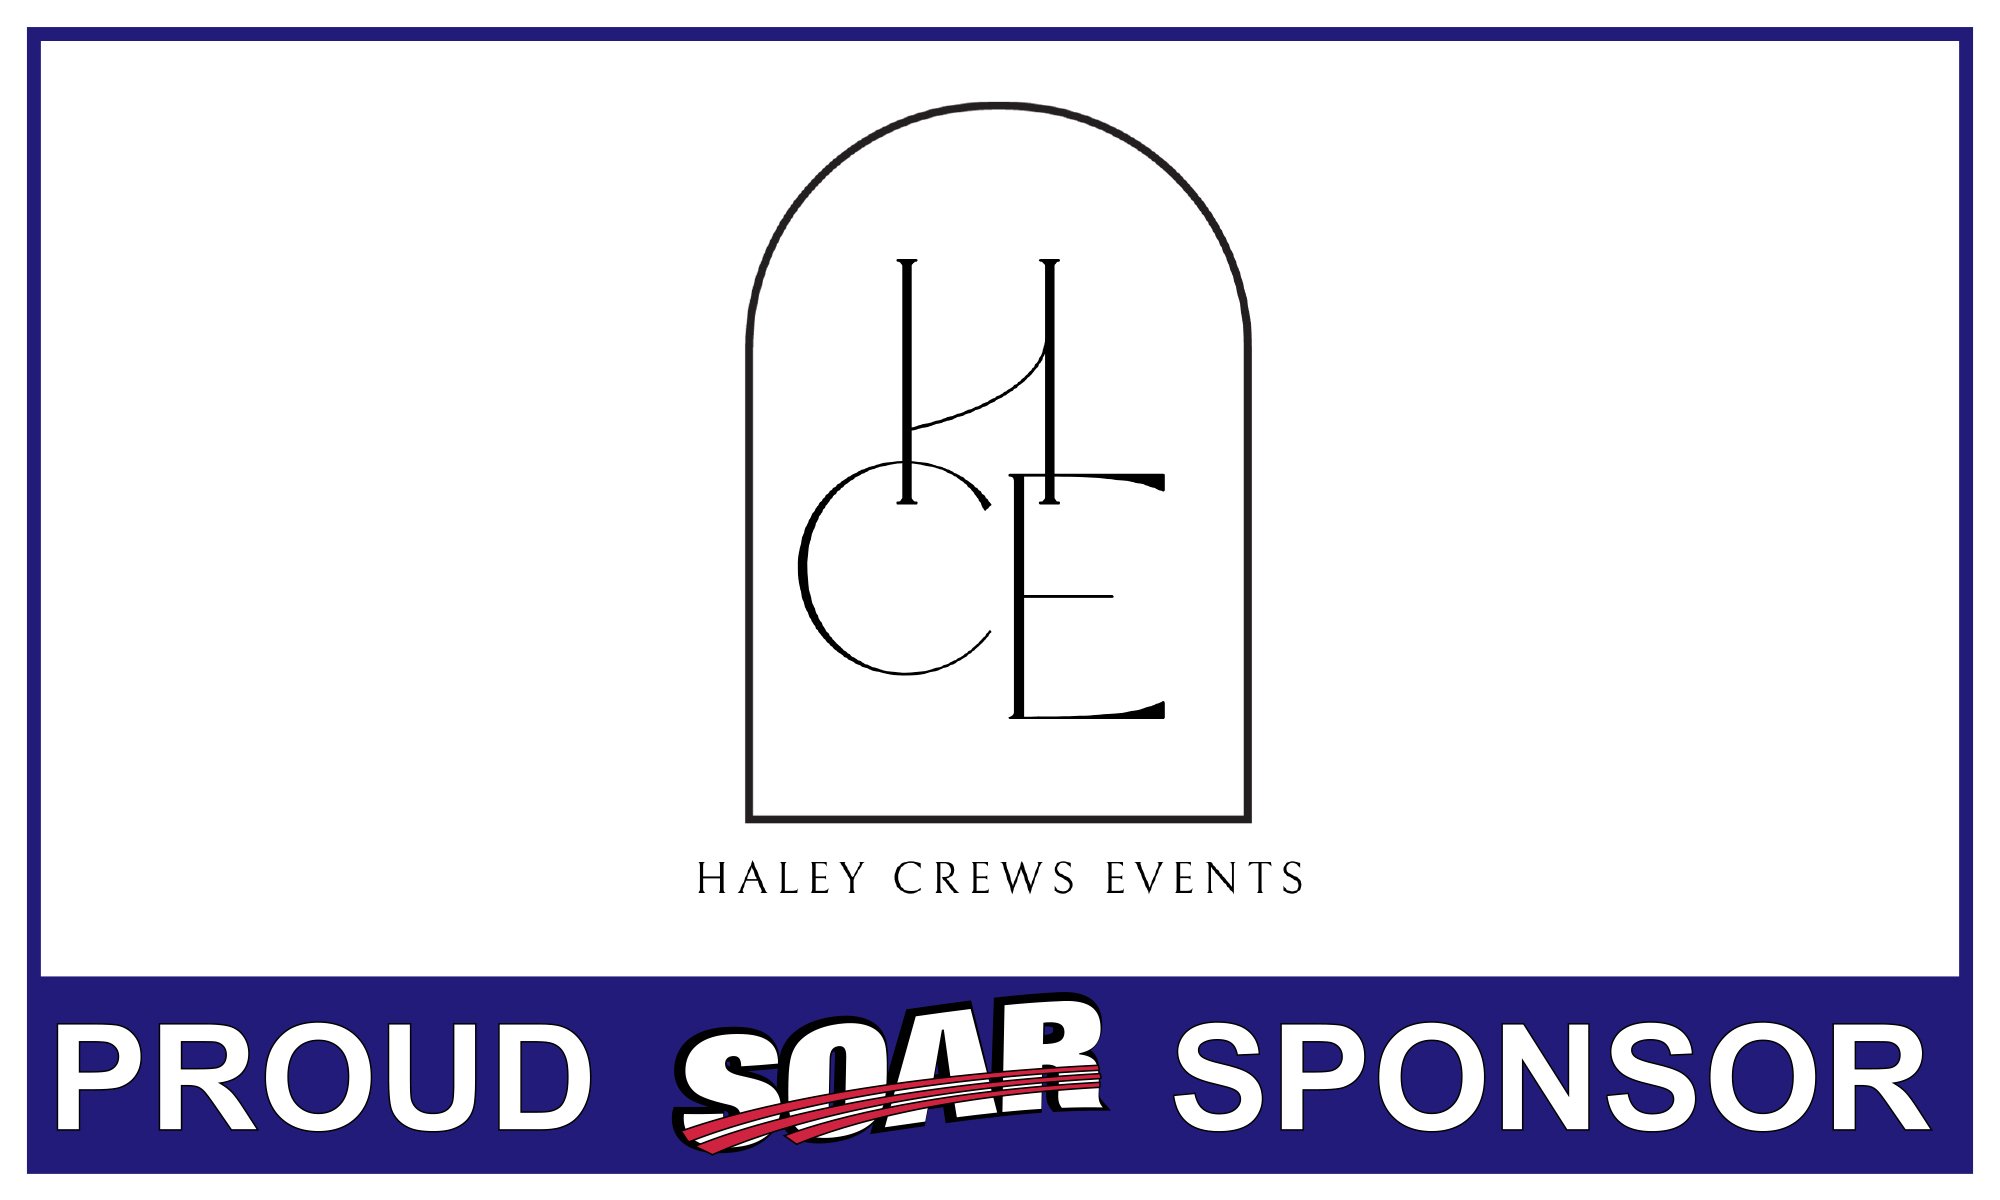 Haley Crews Events Sponsor Banner.jpg